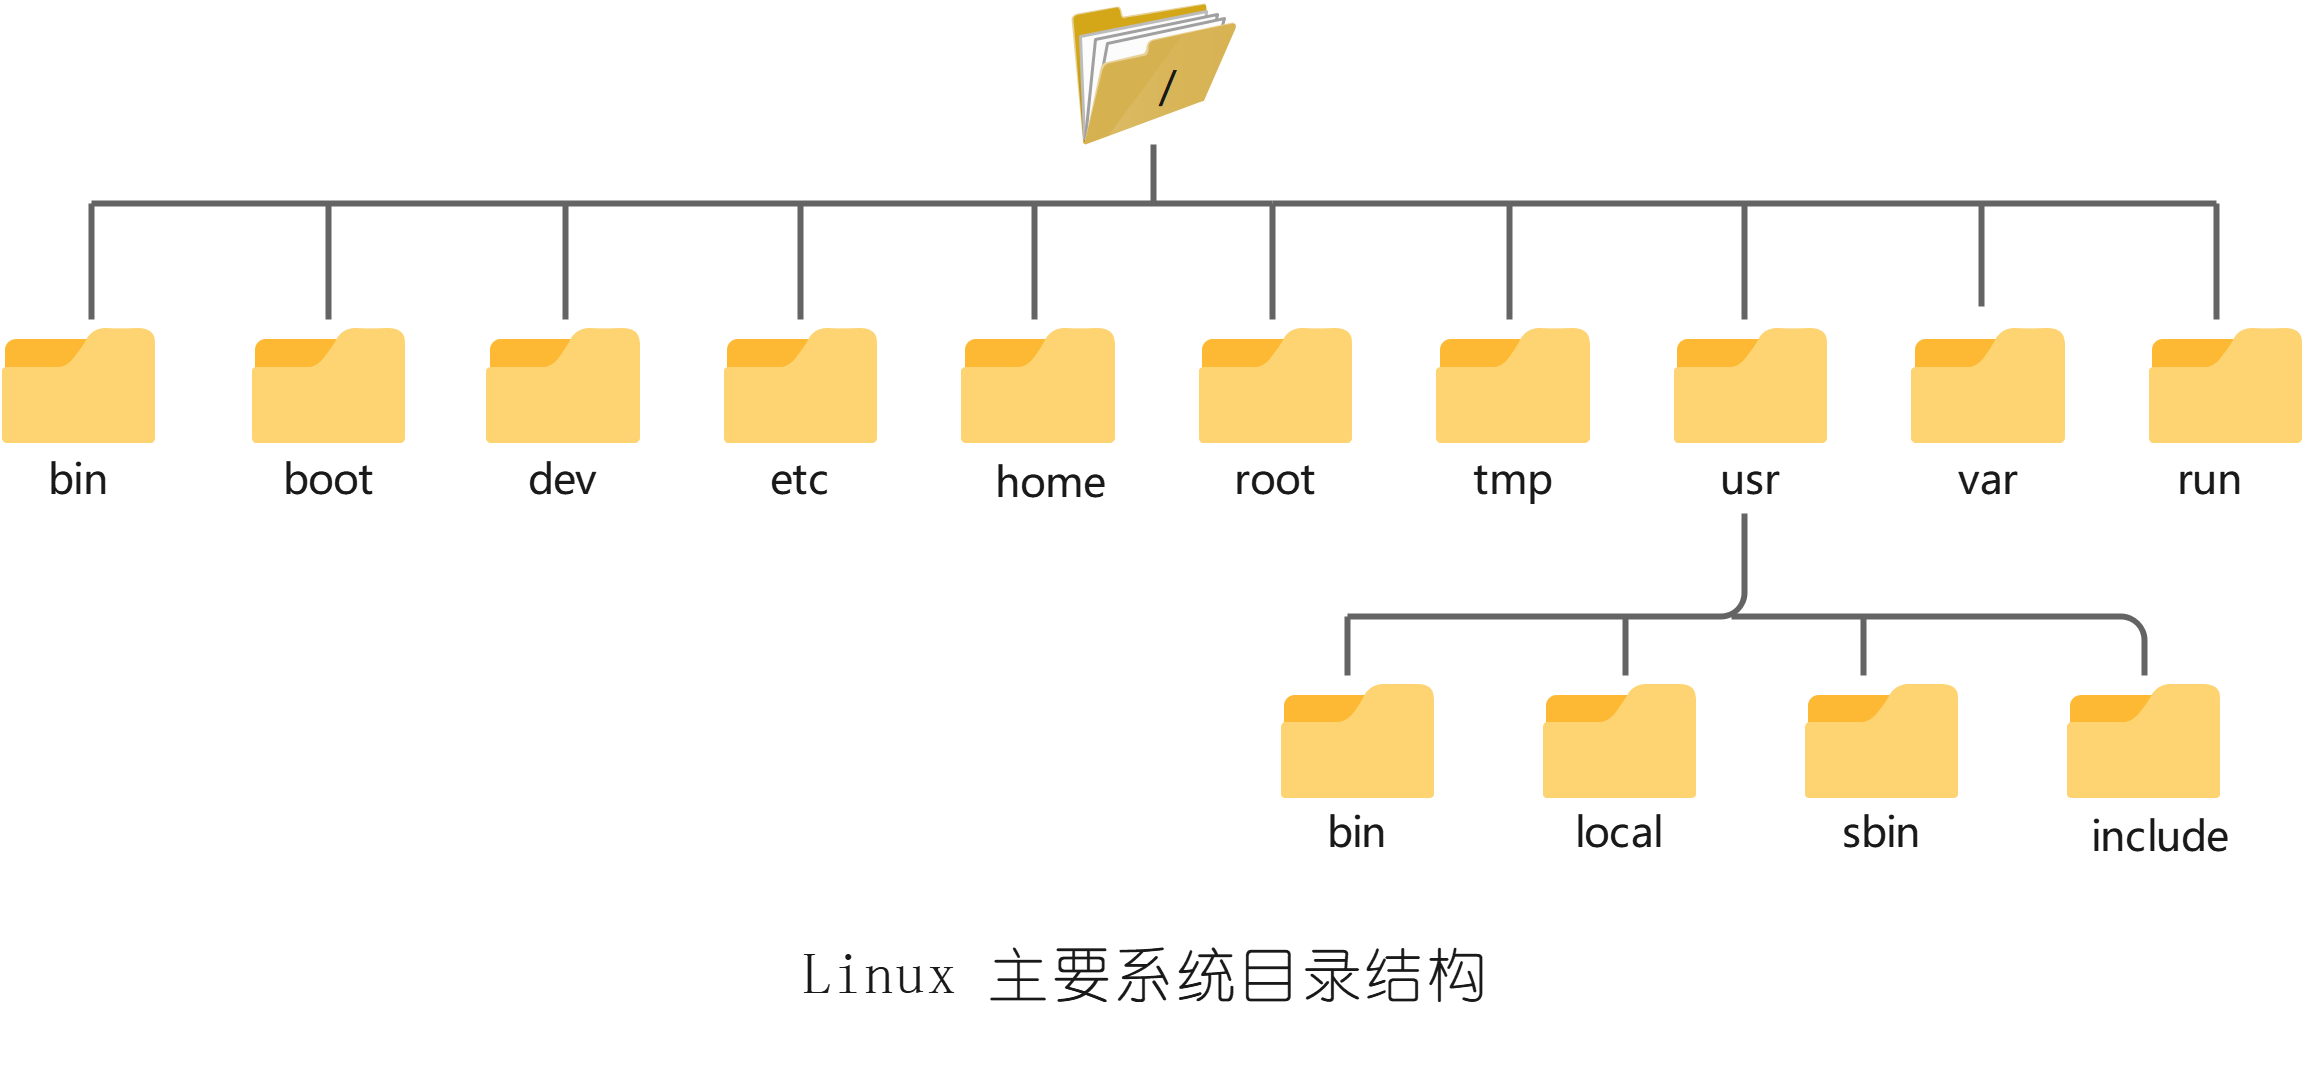 linux赋权限命令_linux 修改权限命令_linux文件夹权限命令